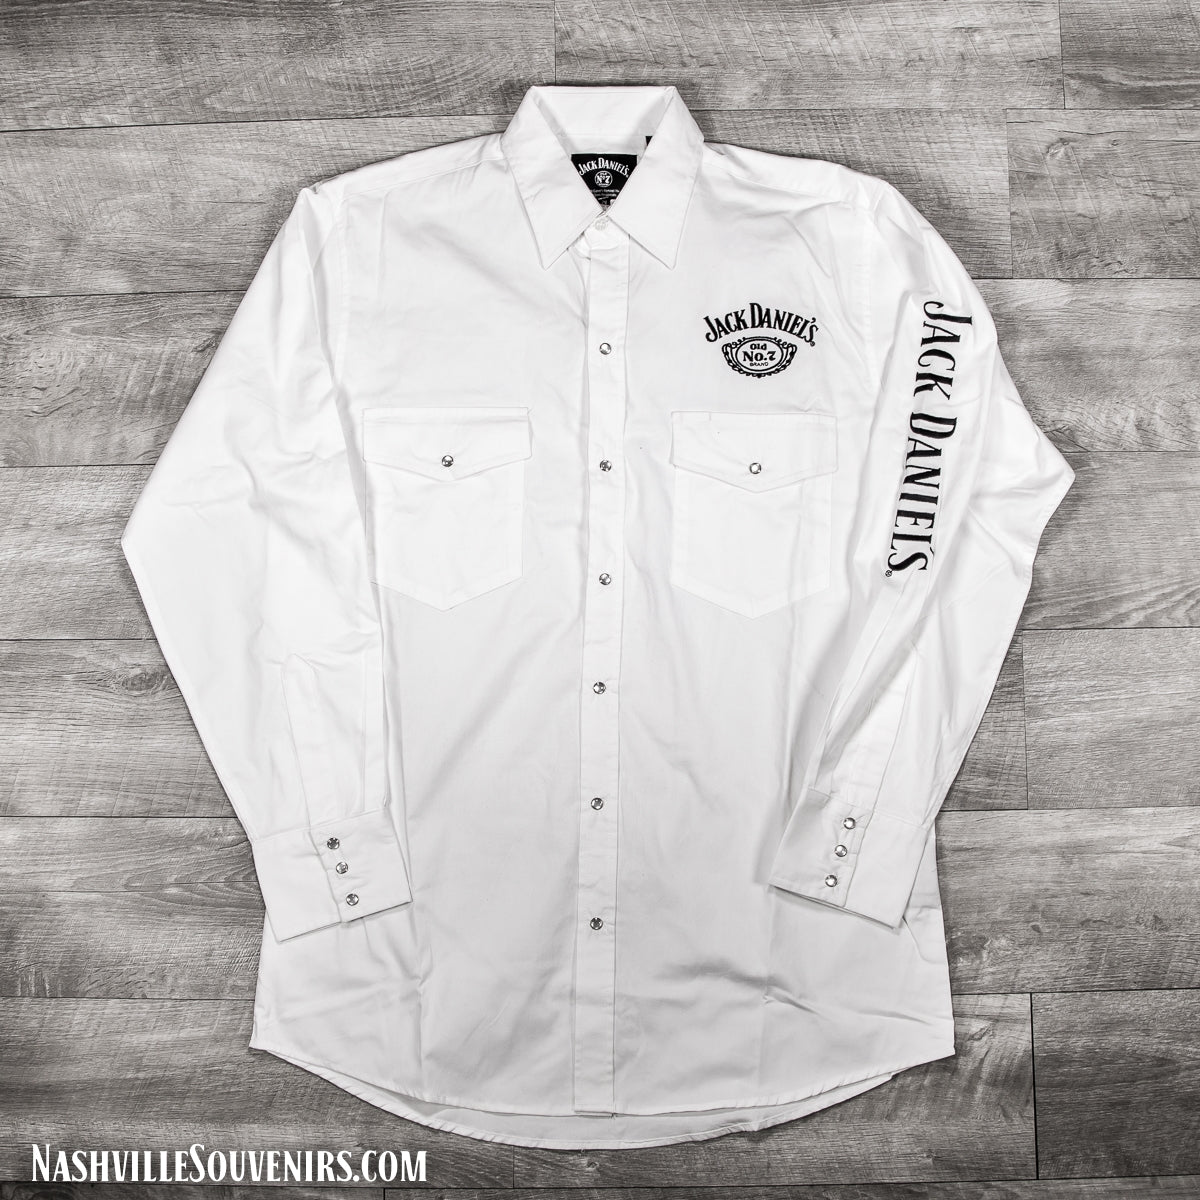 Jack Daniels Western Shirts | Jackets | Hoodies 